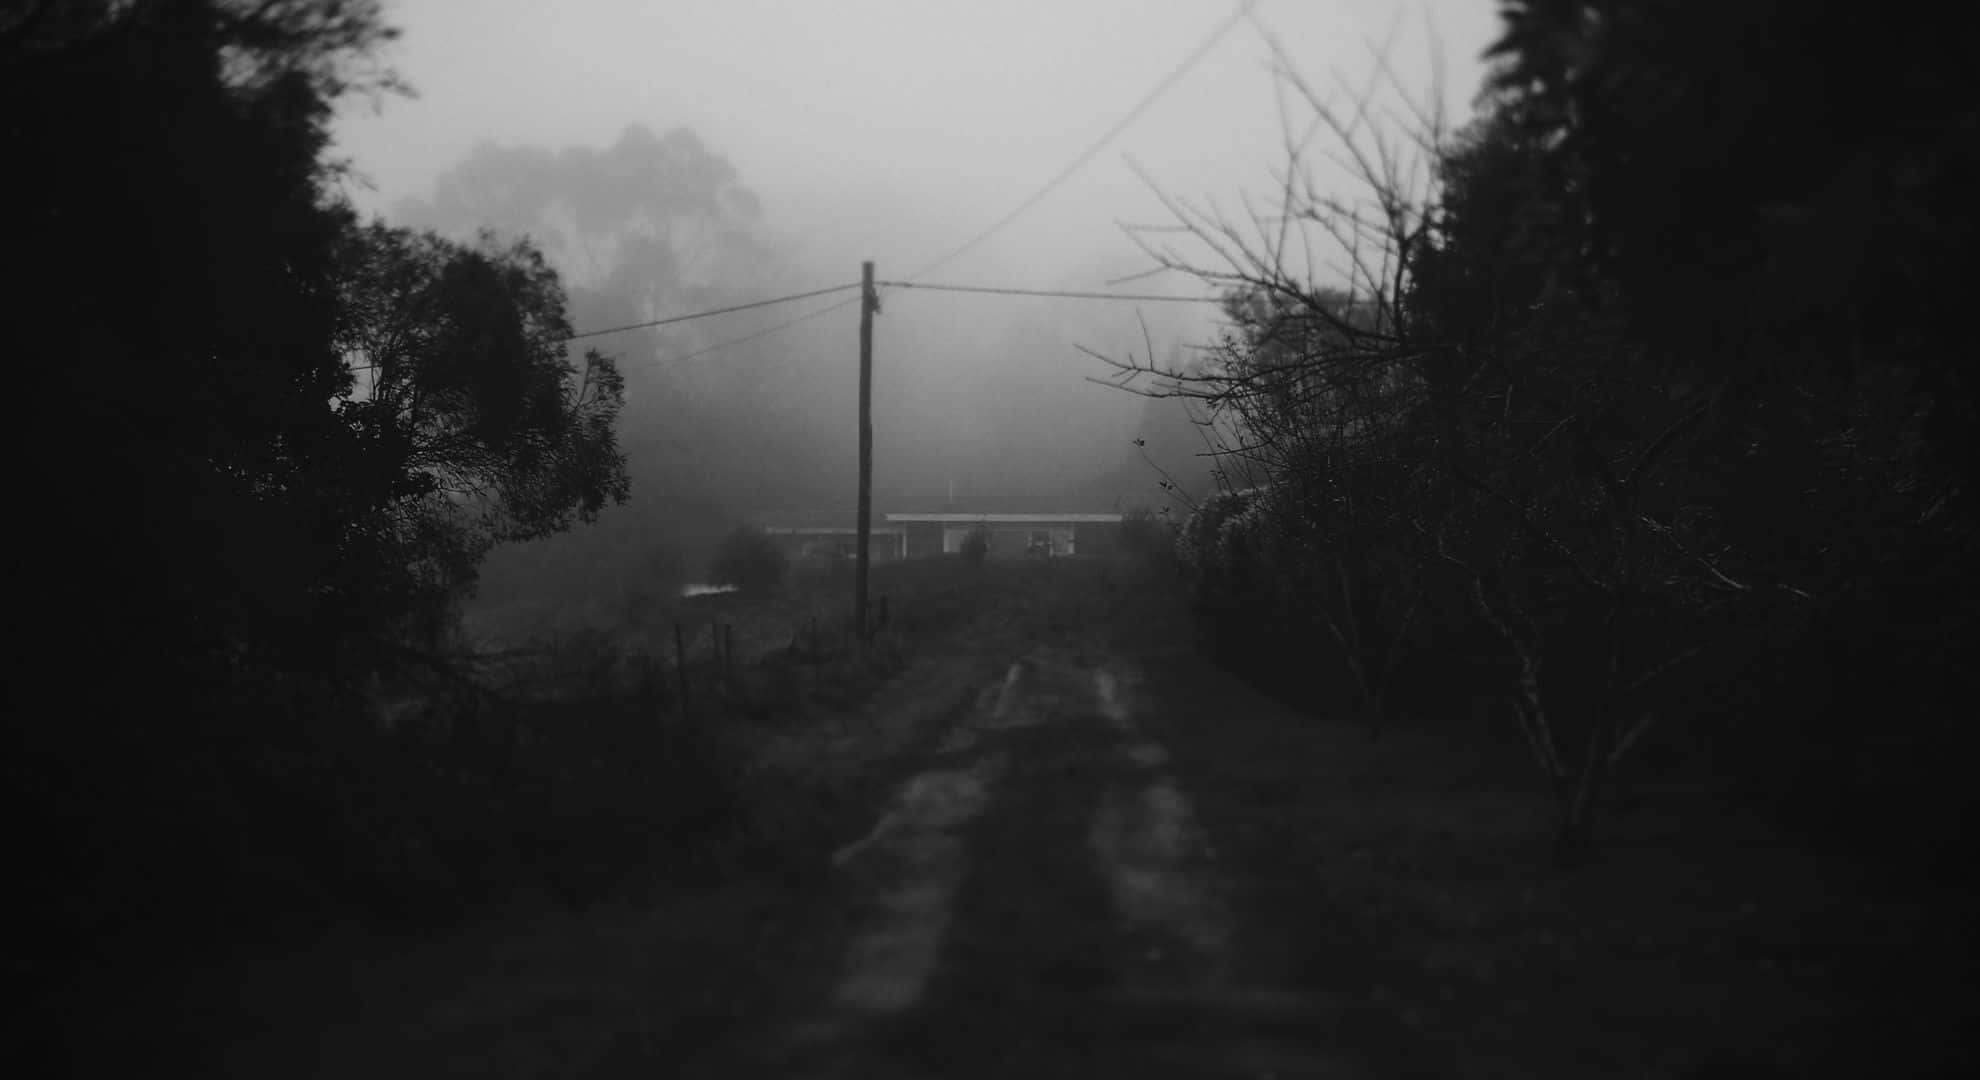 Walking Through A Dark And Depressing Landscape